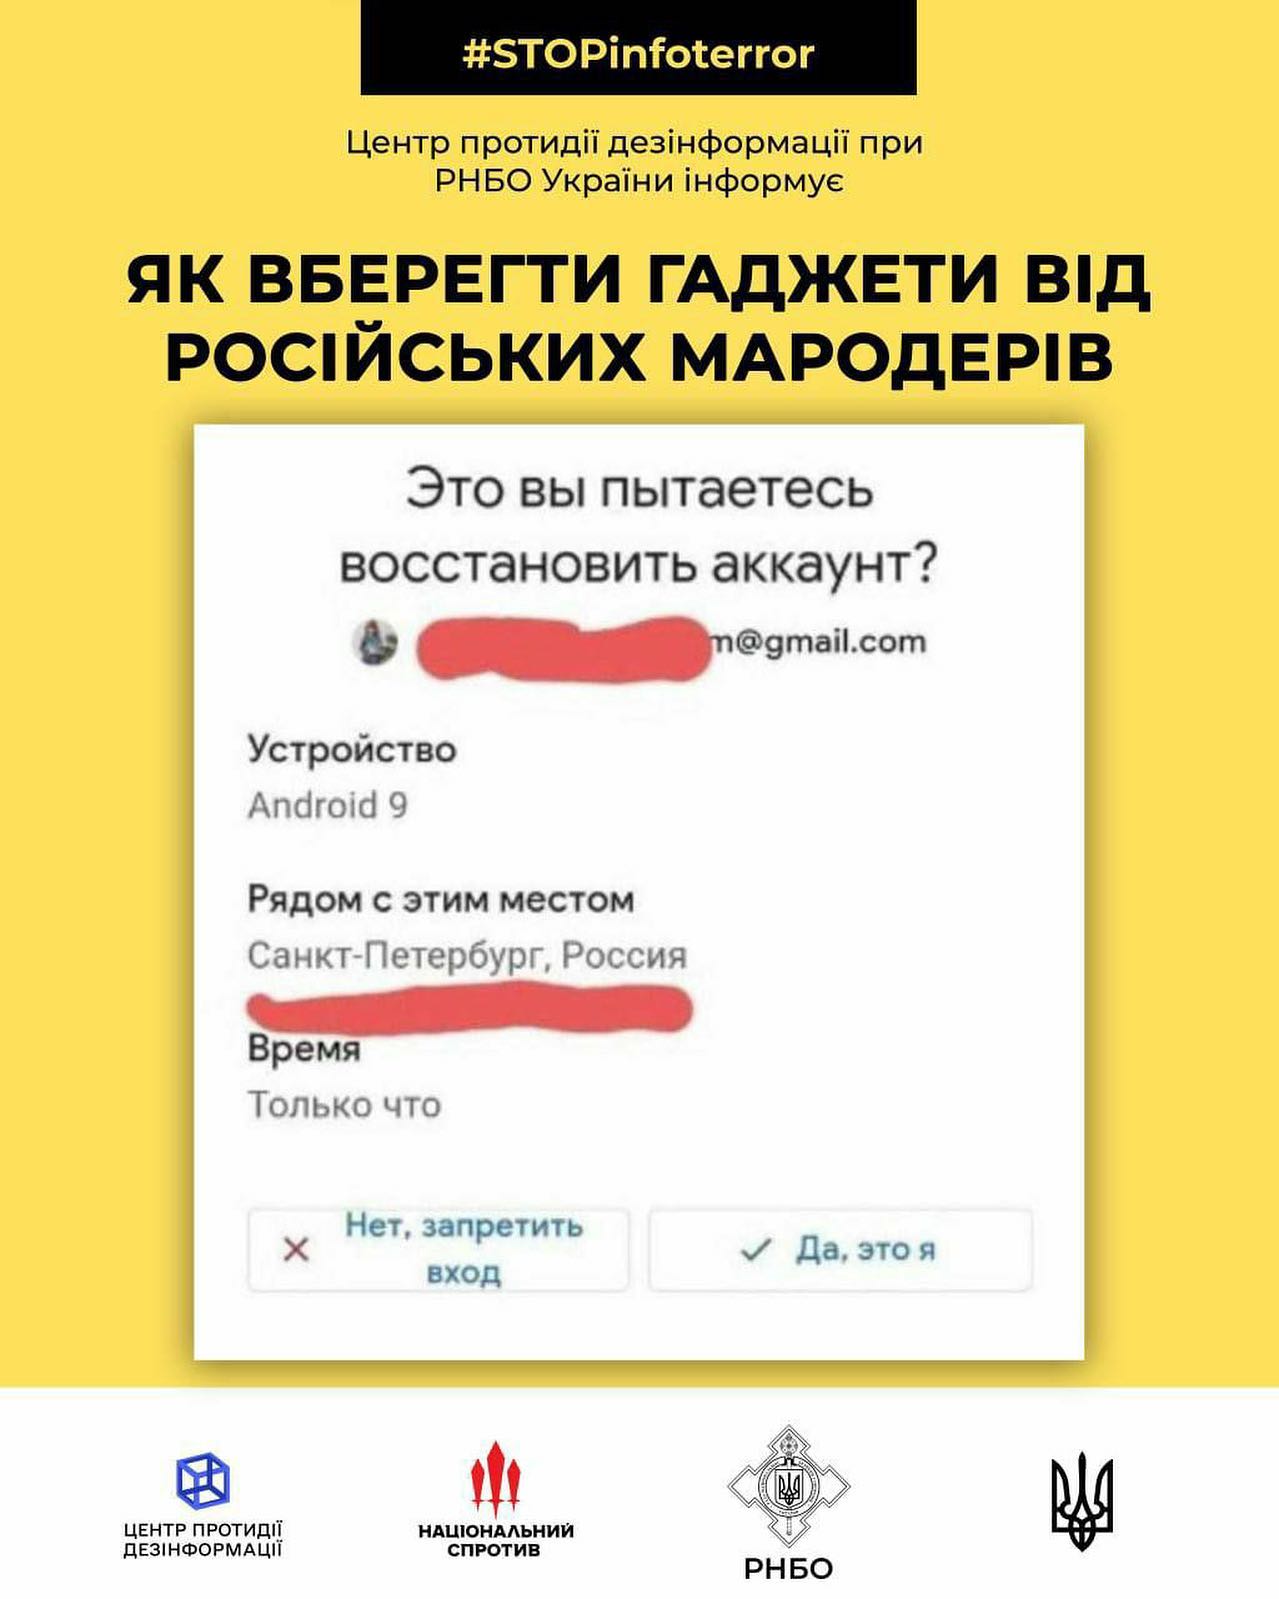 ЦПД при РНБО України вчергове закликає убезпечити свої гаджети